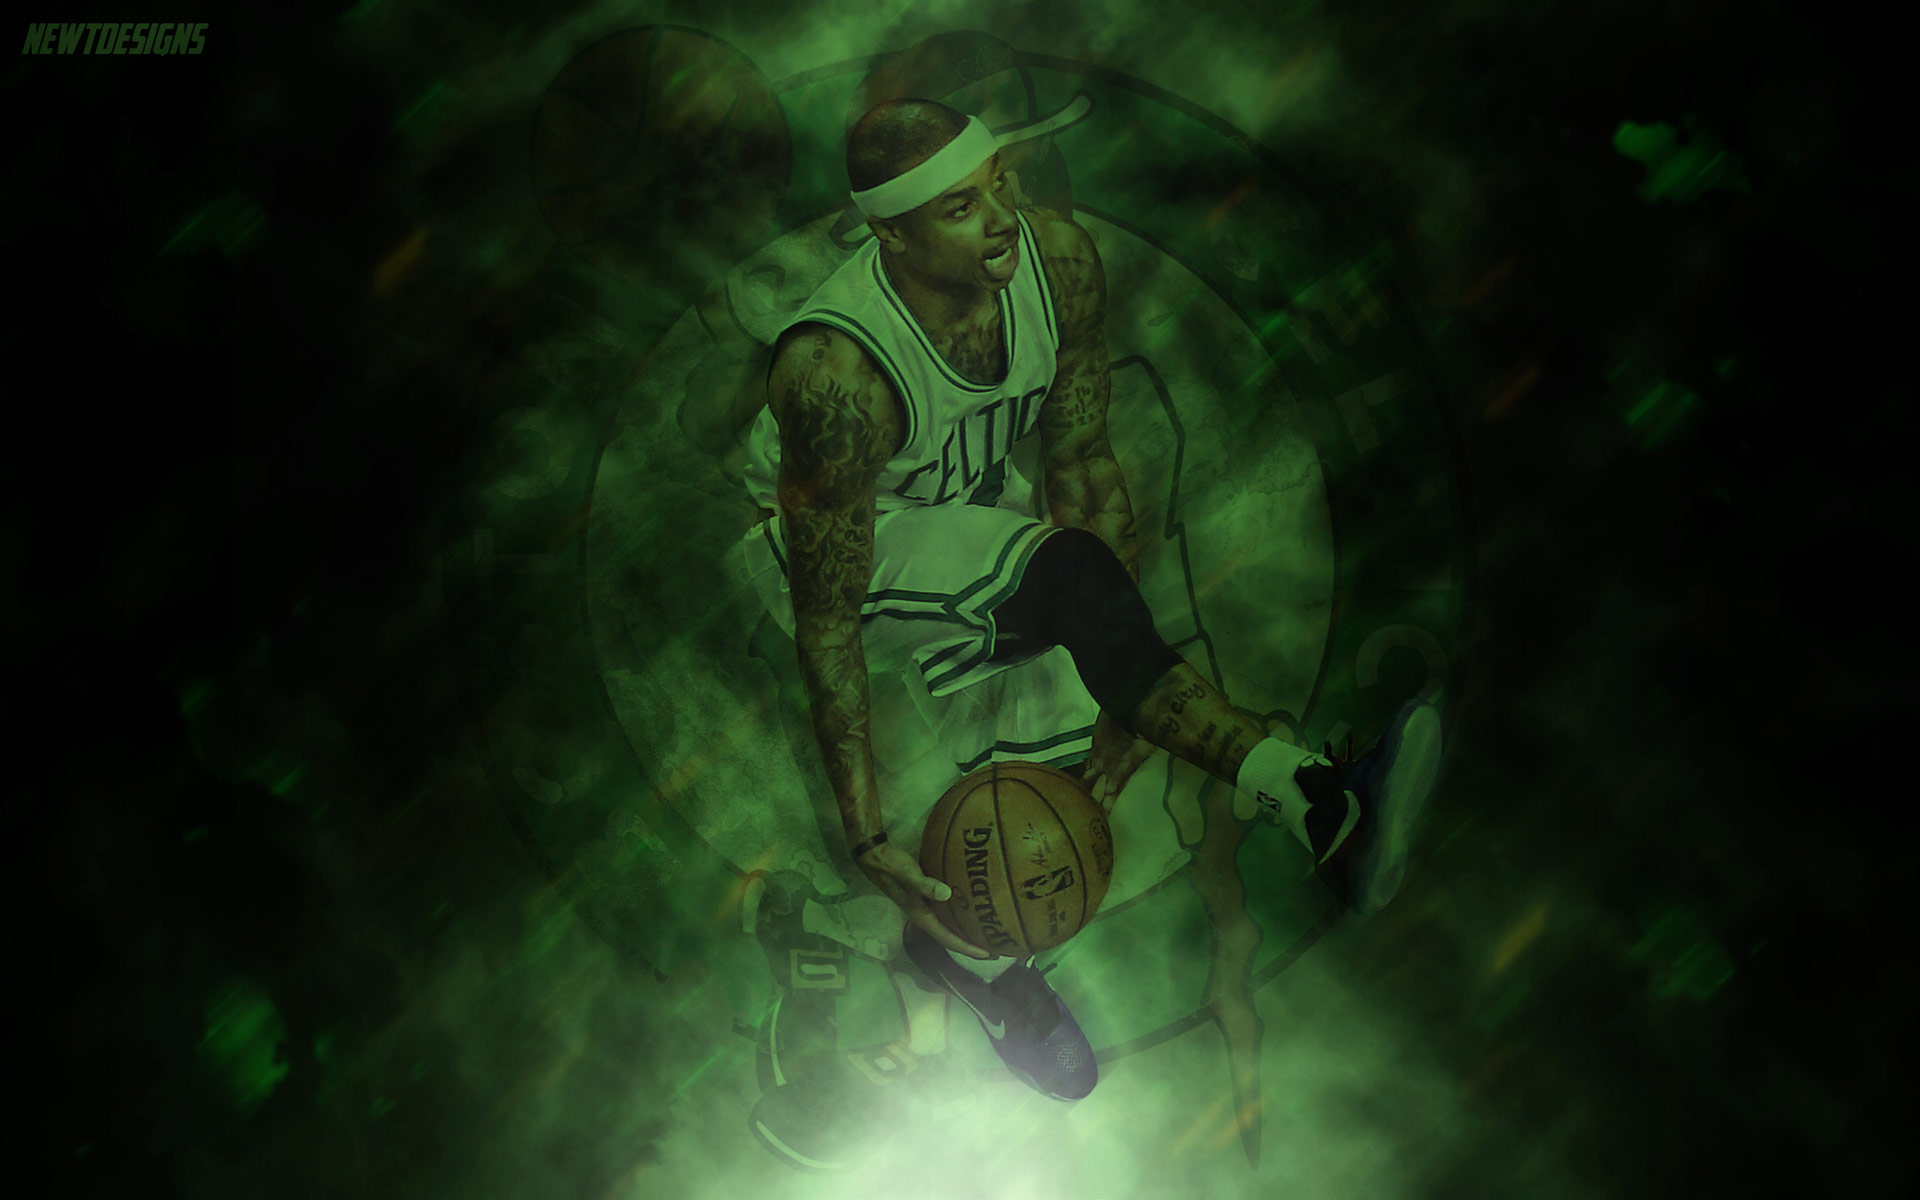 Isaiah Thomas Dunk In Game Celtics